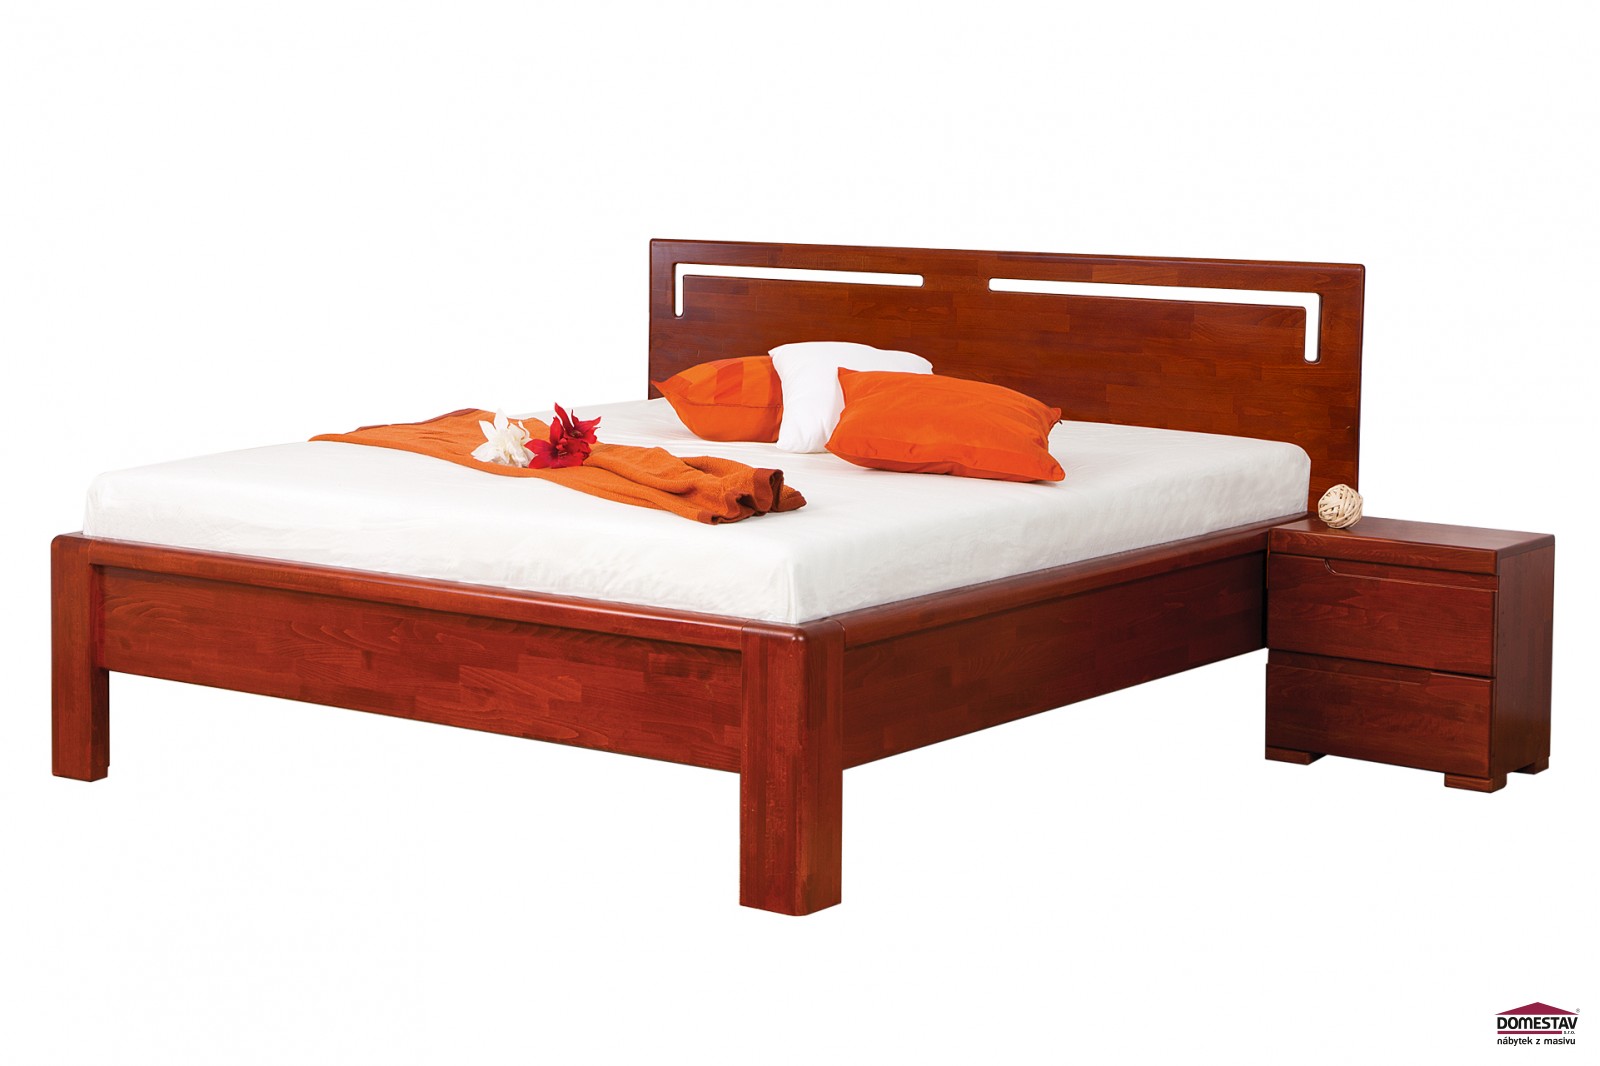 manželská postel FLORENCIA buk 160cm F129BC-160